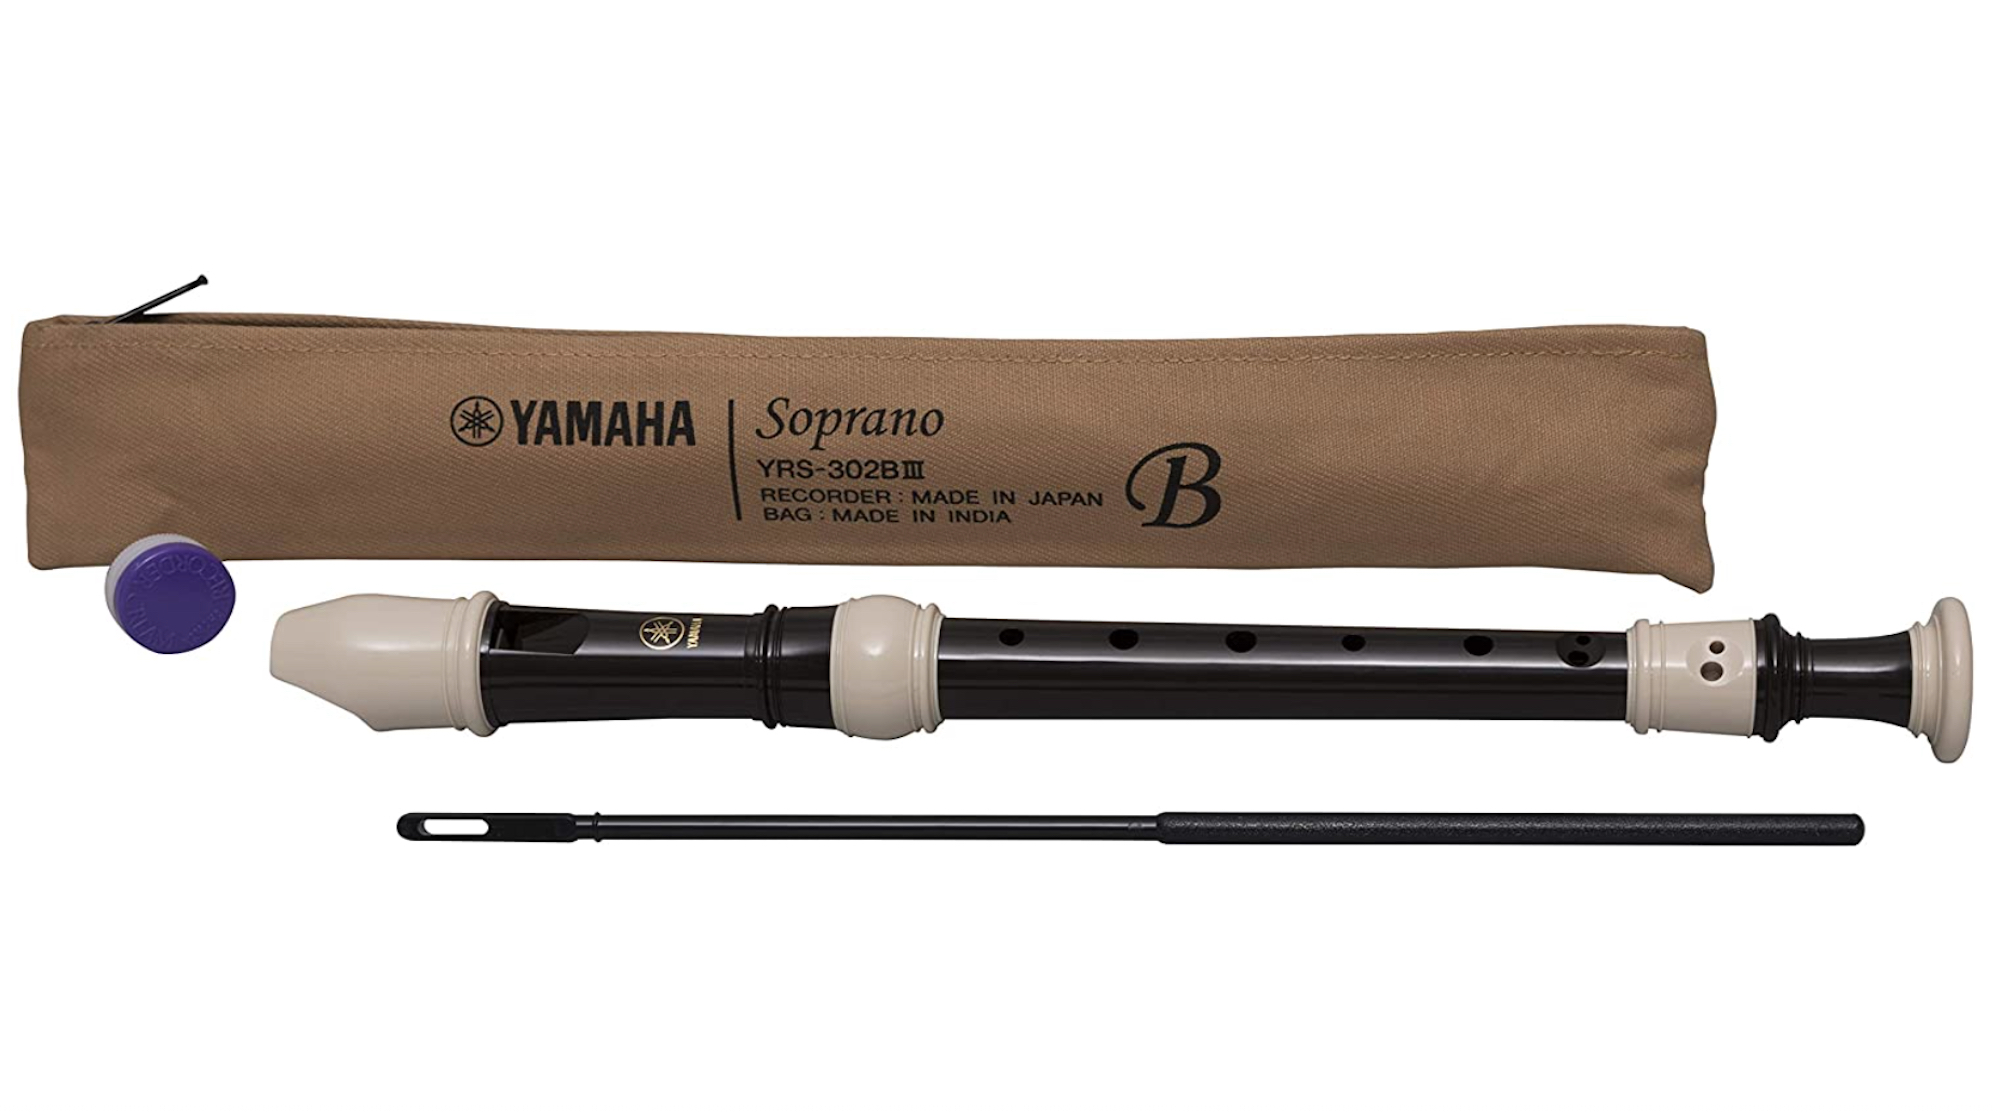 Yamaha Soprano Recorder w/ Baroque Fingering, Key of C (YRS-302B) $8 + FS w/ Prime or orders of $25+